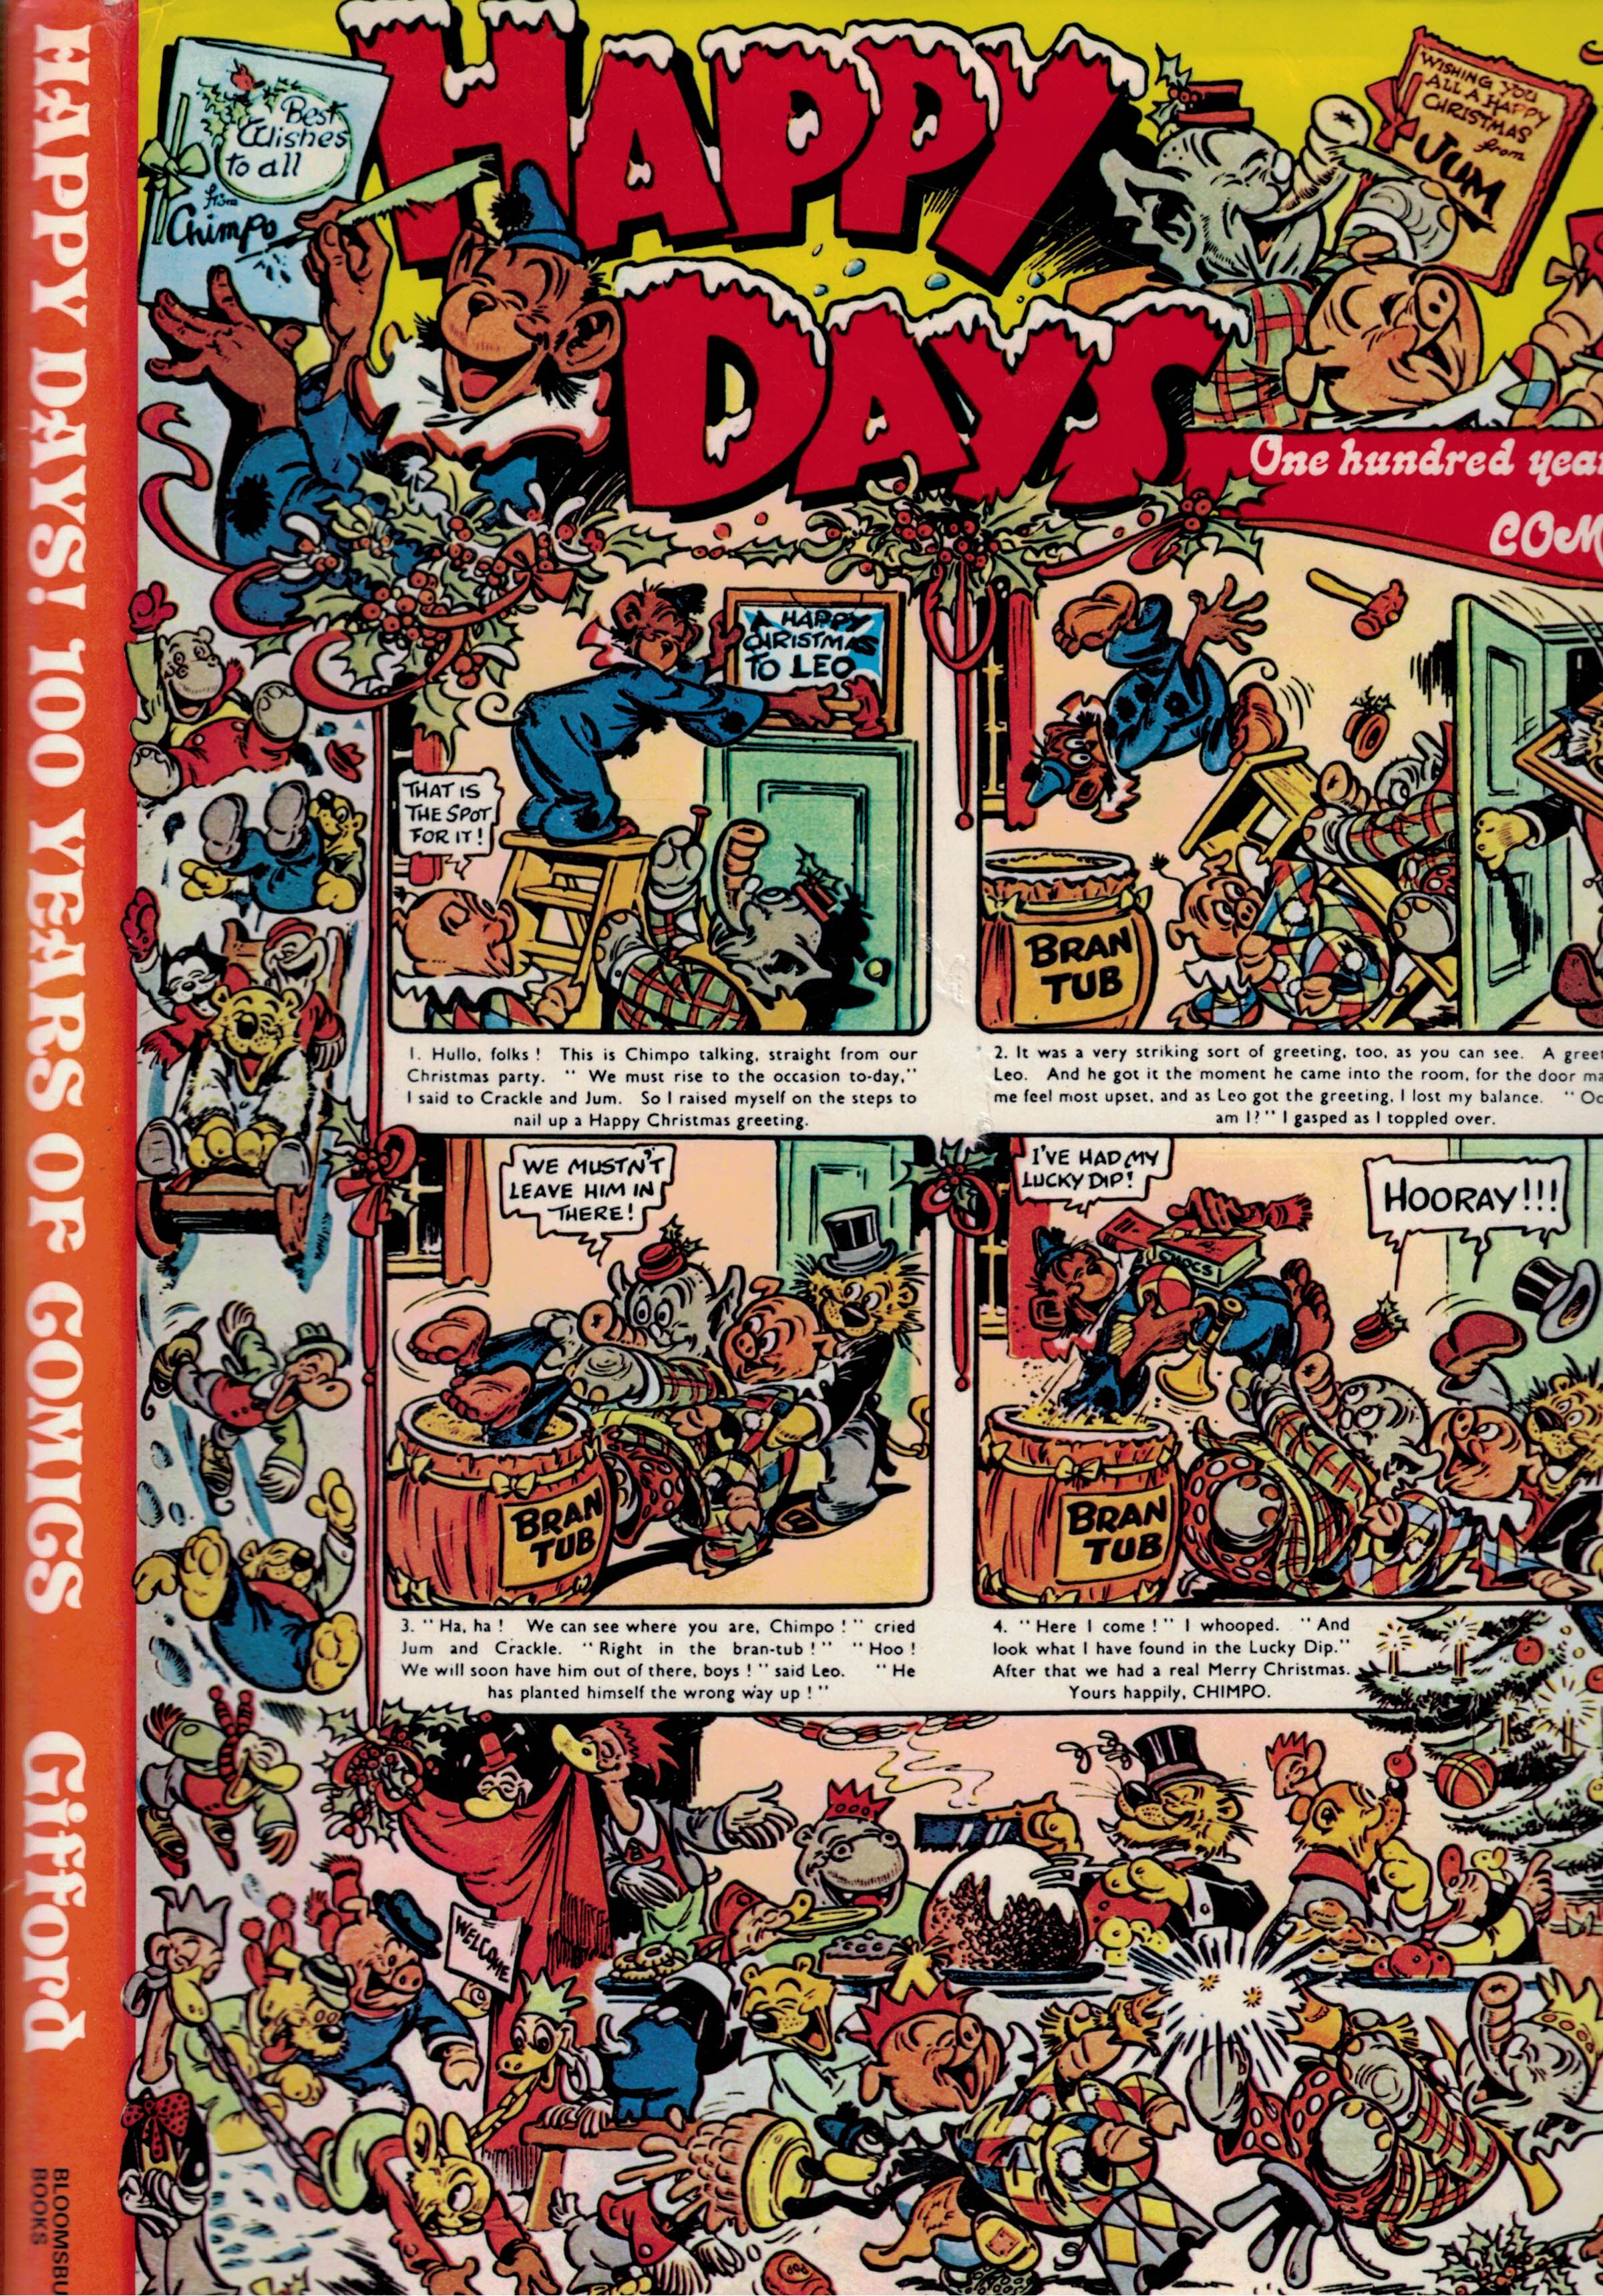 Happy Days. A Century of Comics.